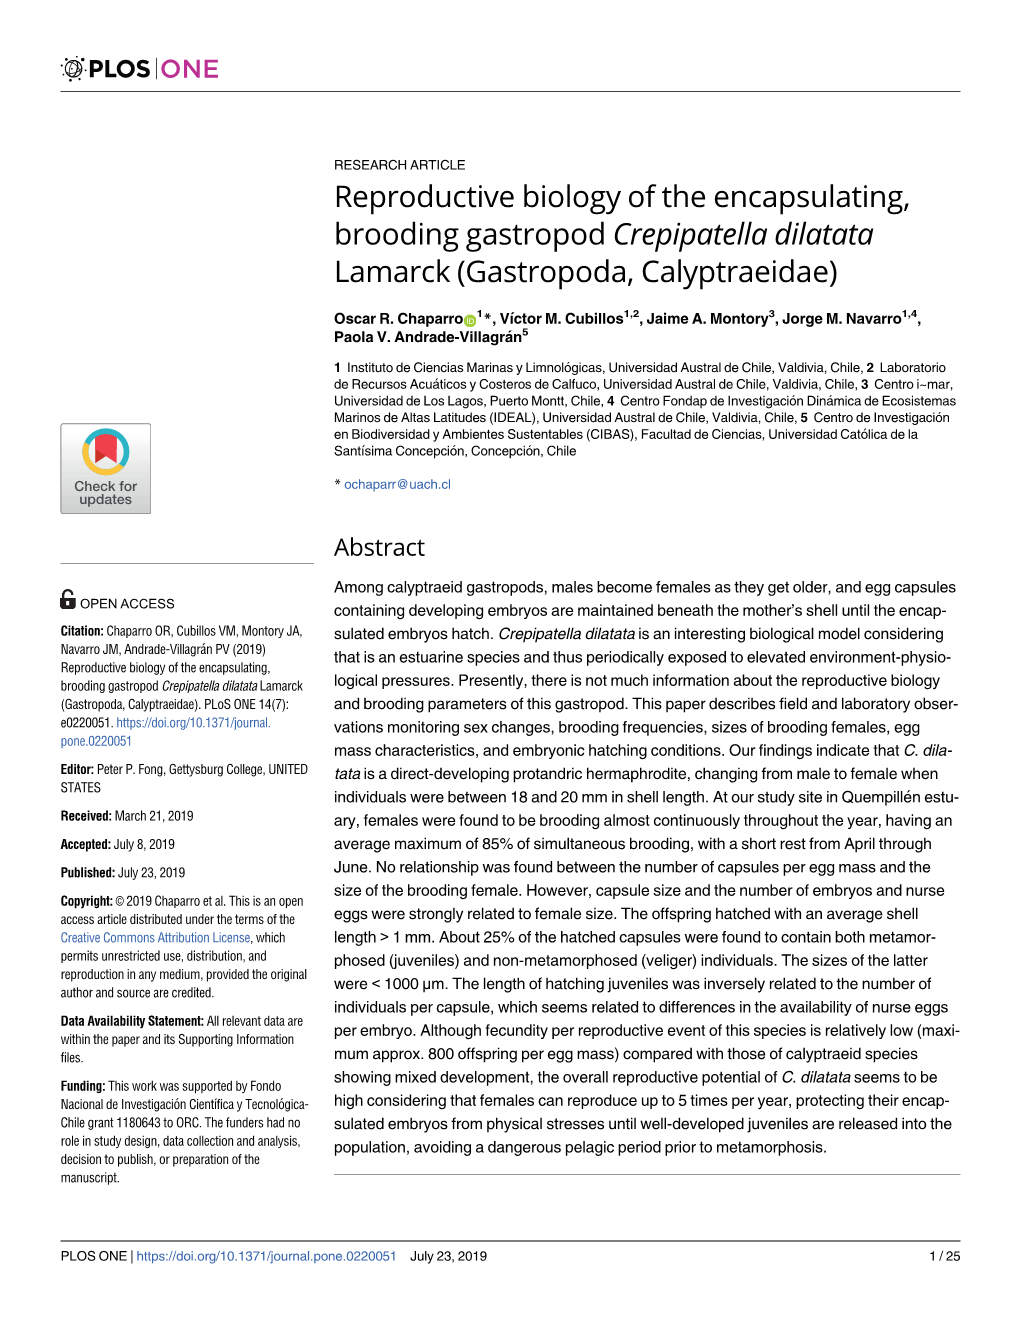 Reproductive Biology of the Encapsulating, Brooding Gastropod Crepipatella Dilatata Lamarck (Gastropoda, Calyptraeidae)